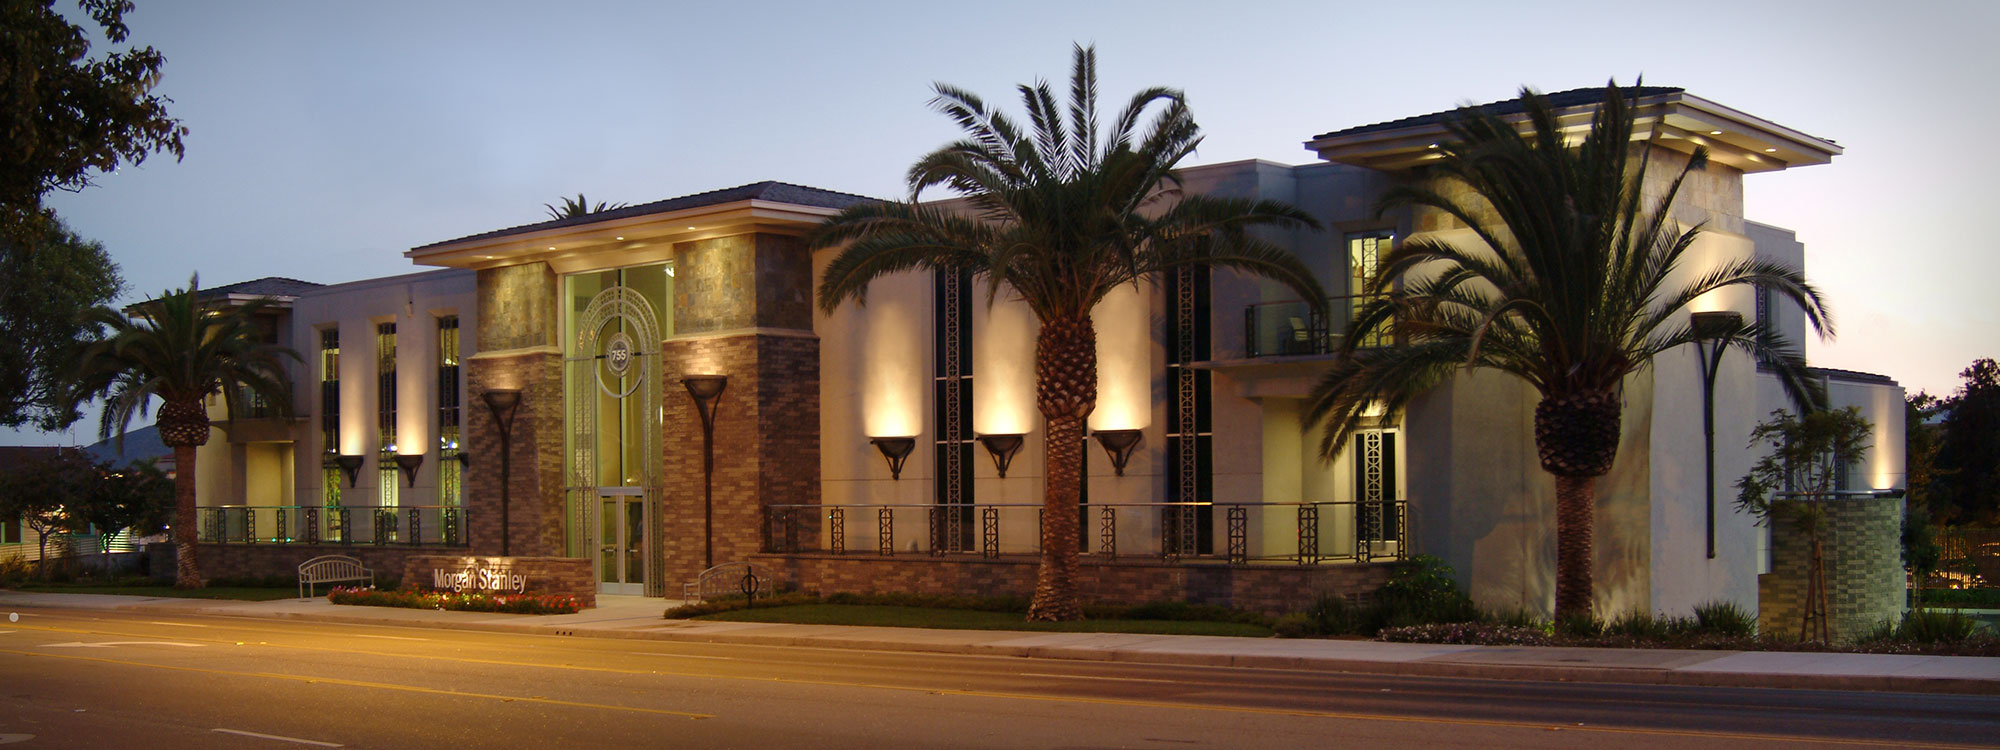 Financial Institution Builder - San Luis Obispo Contractor - JW Design & Construction